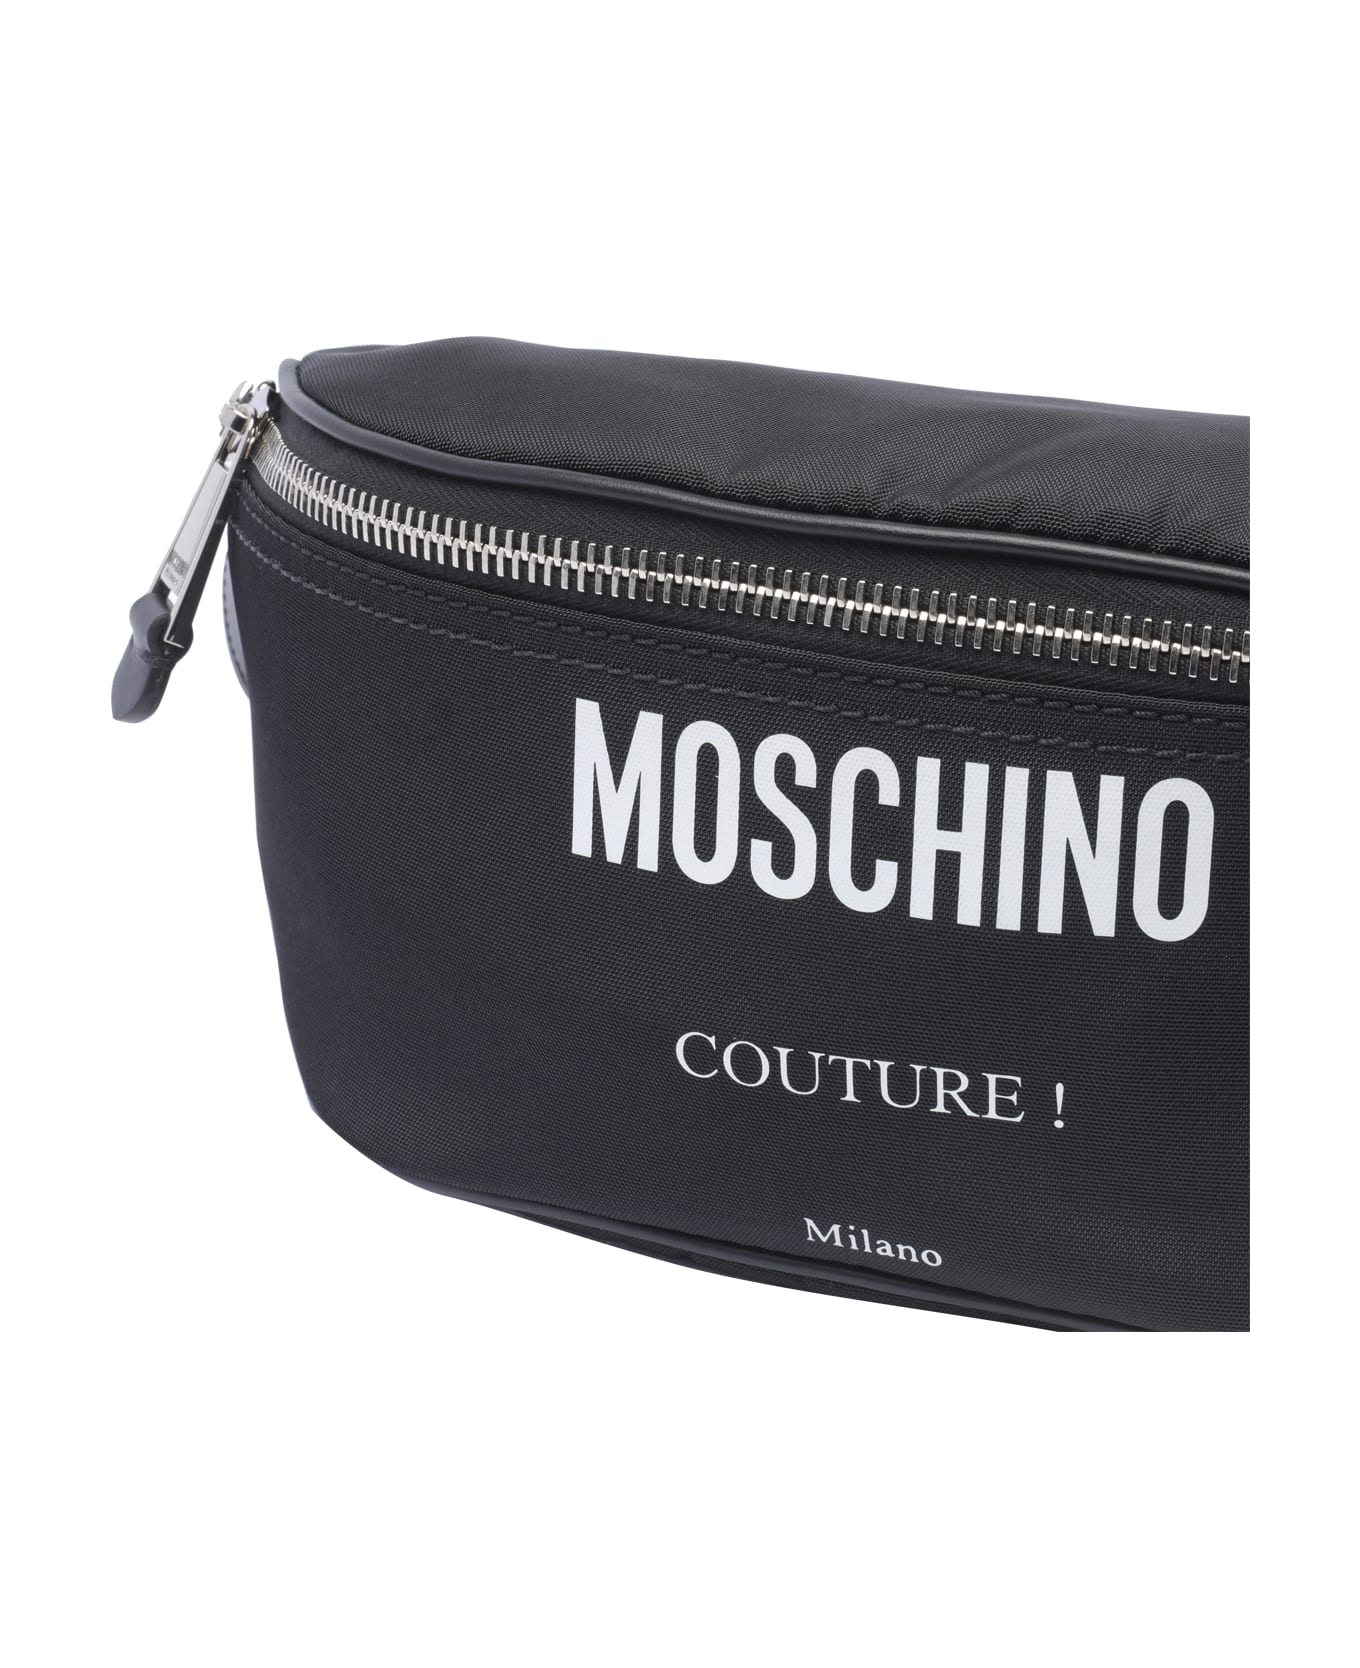 Moschino Couture Belt Bag - Black